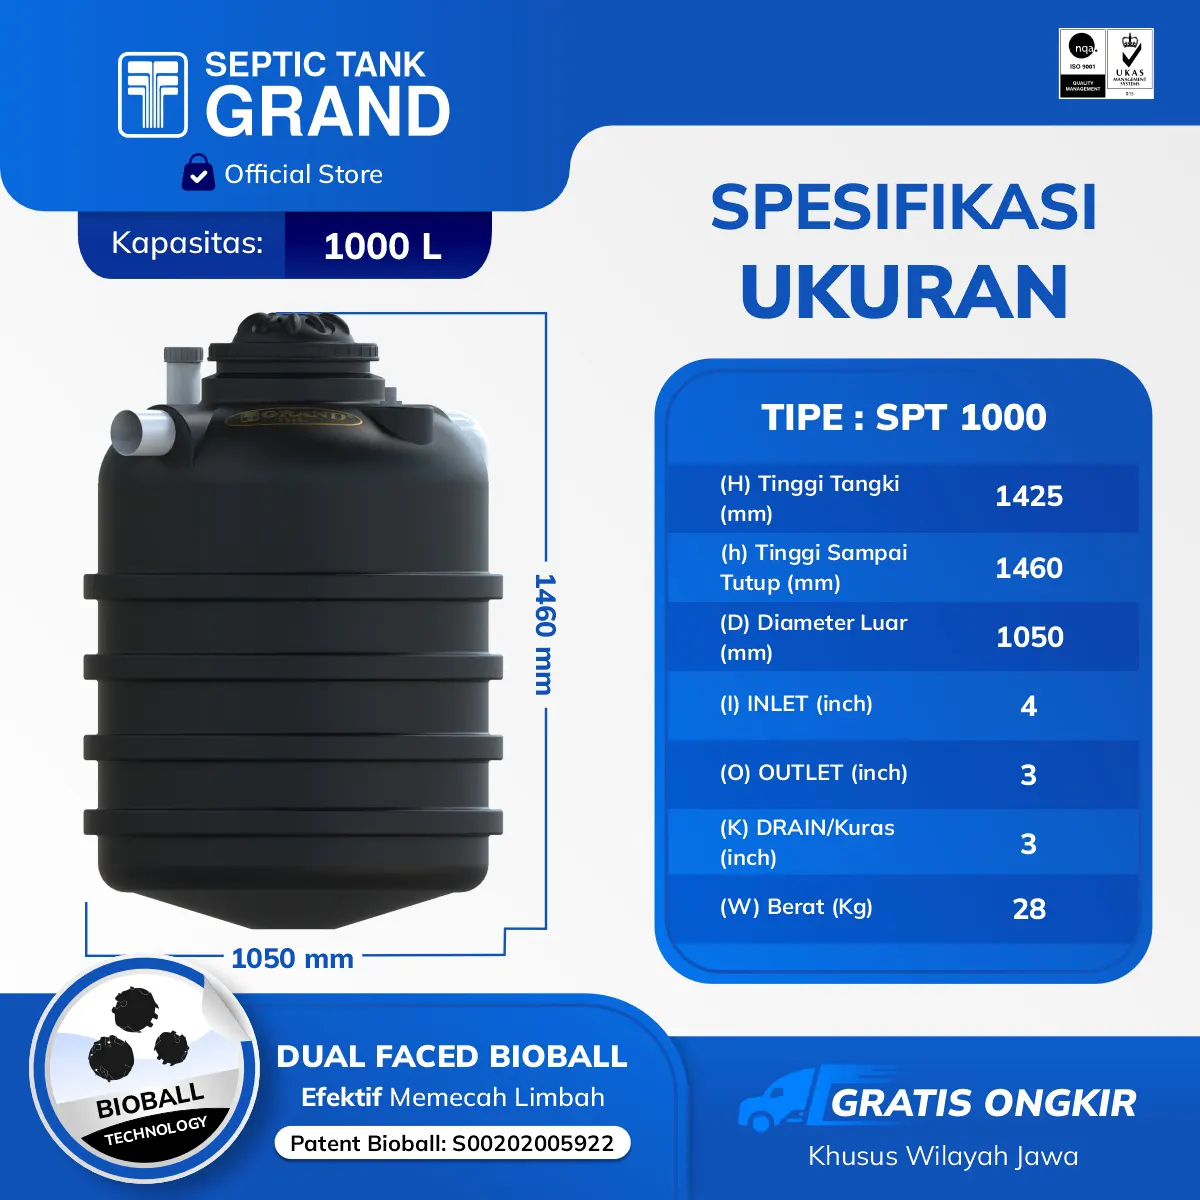 Ukuran Septic Tank Grand 1000 Liter